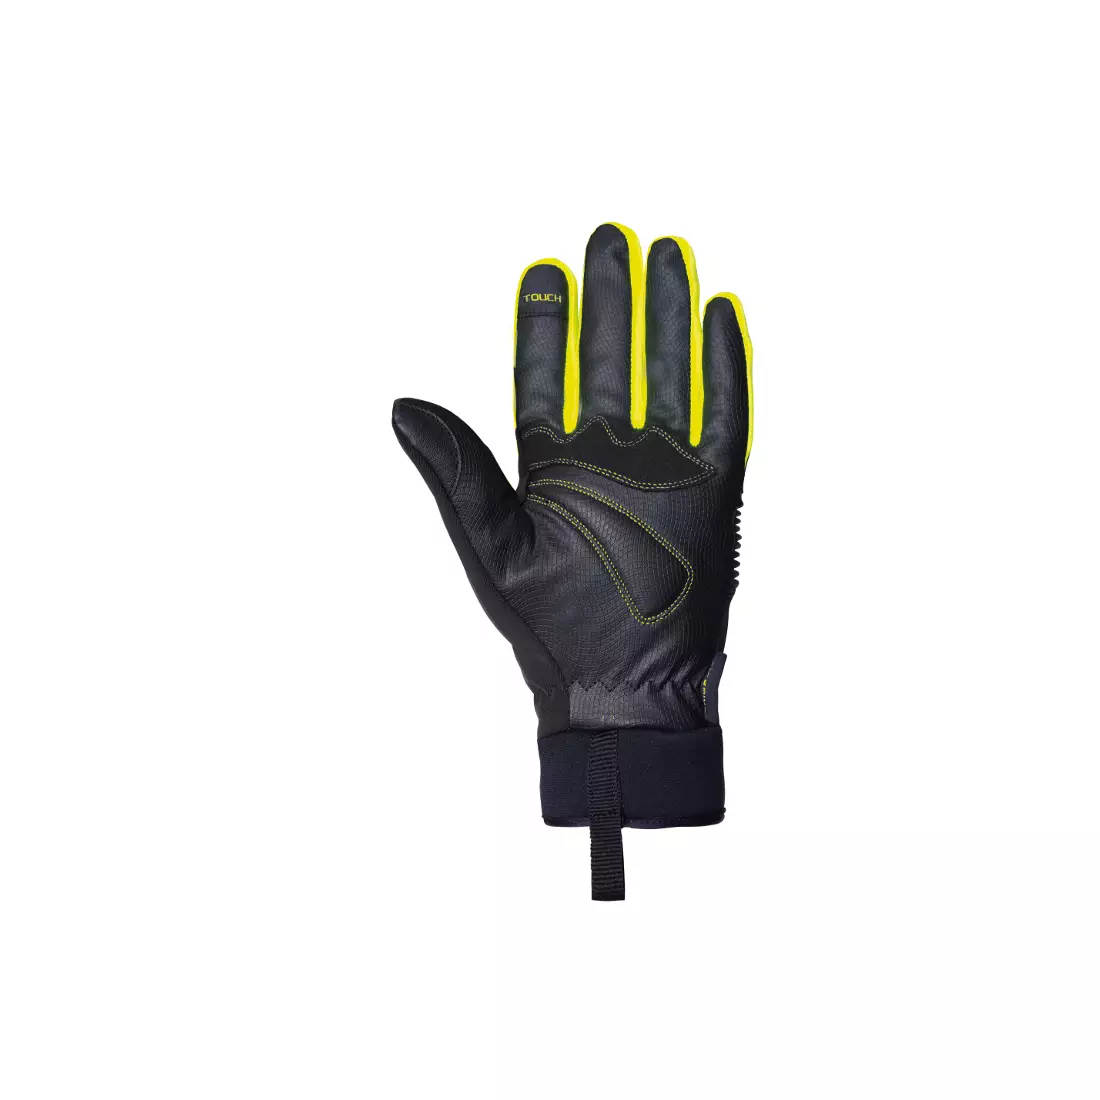 CHIBA RAIN TOUCH winter cycling gloves black-fluorine